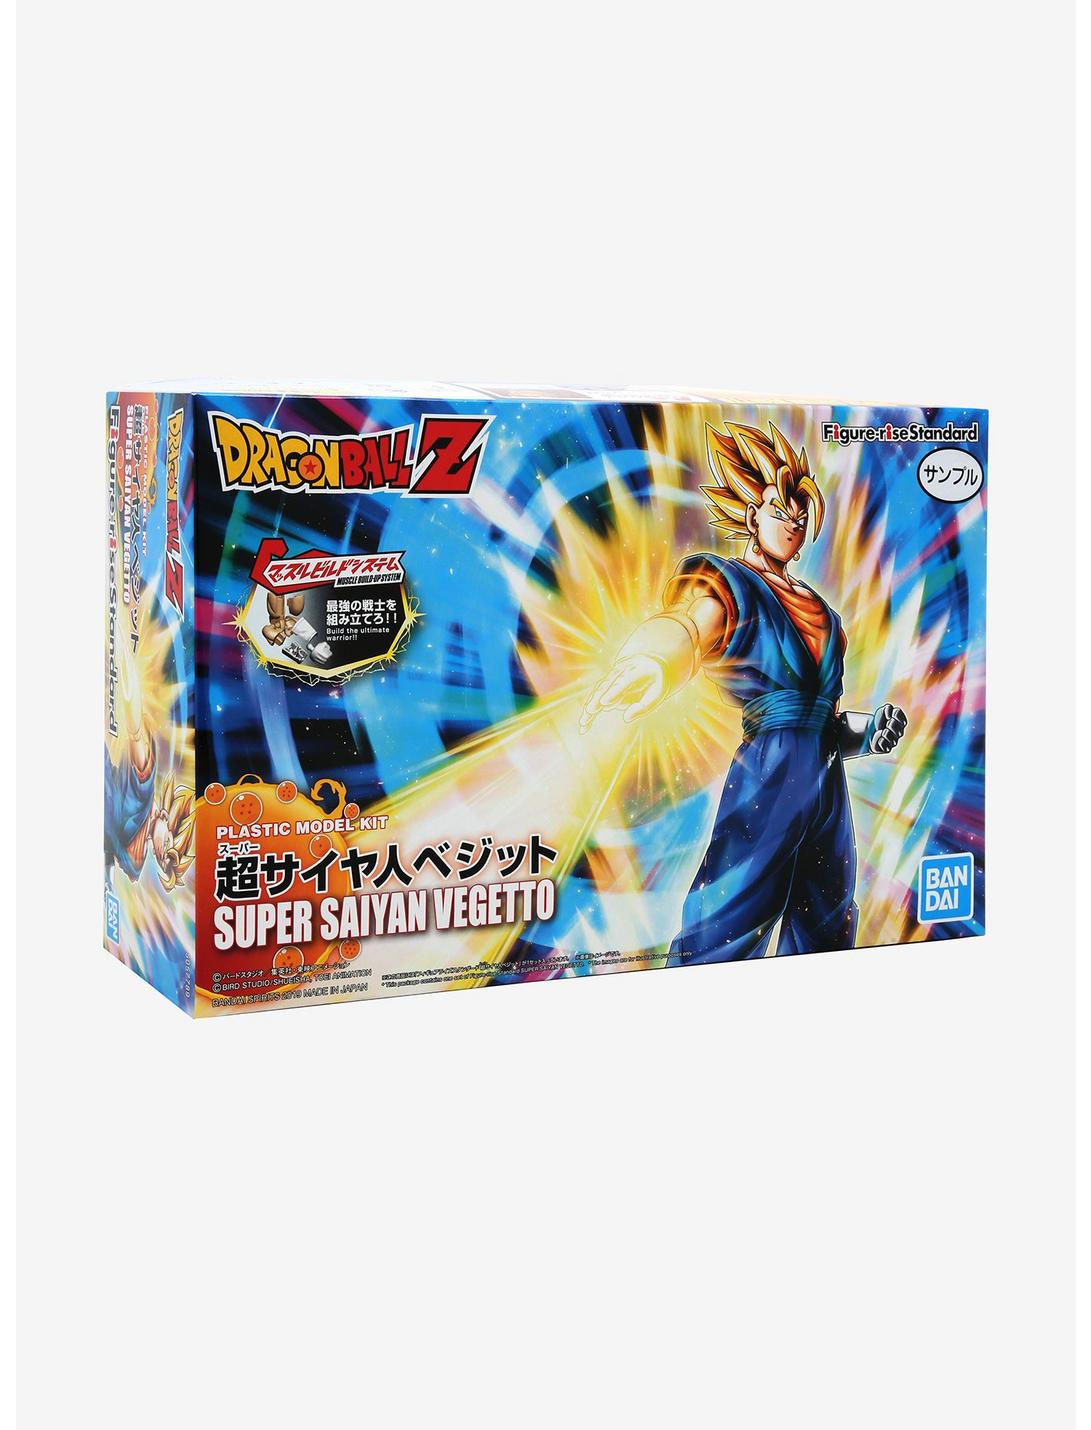 Bandai Figure-Rise Standard Dragon Ball Z Super Saiyan Vegetto Plastic Model Kit, , hi-res